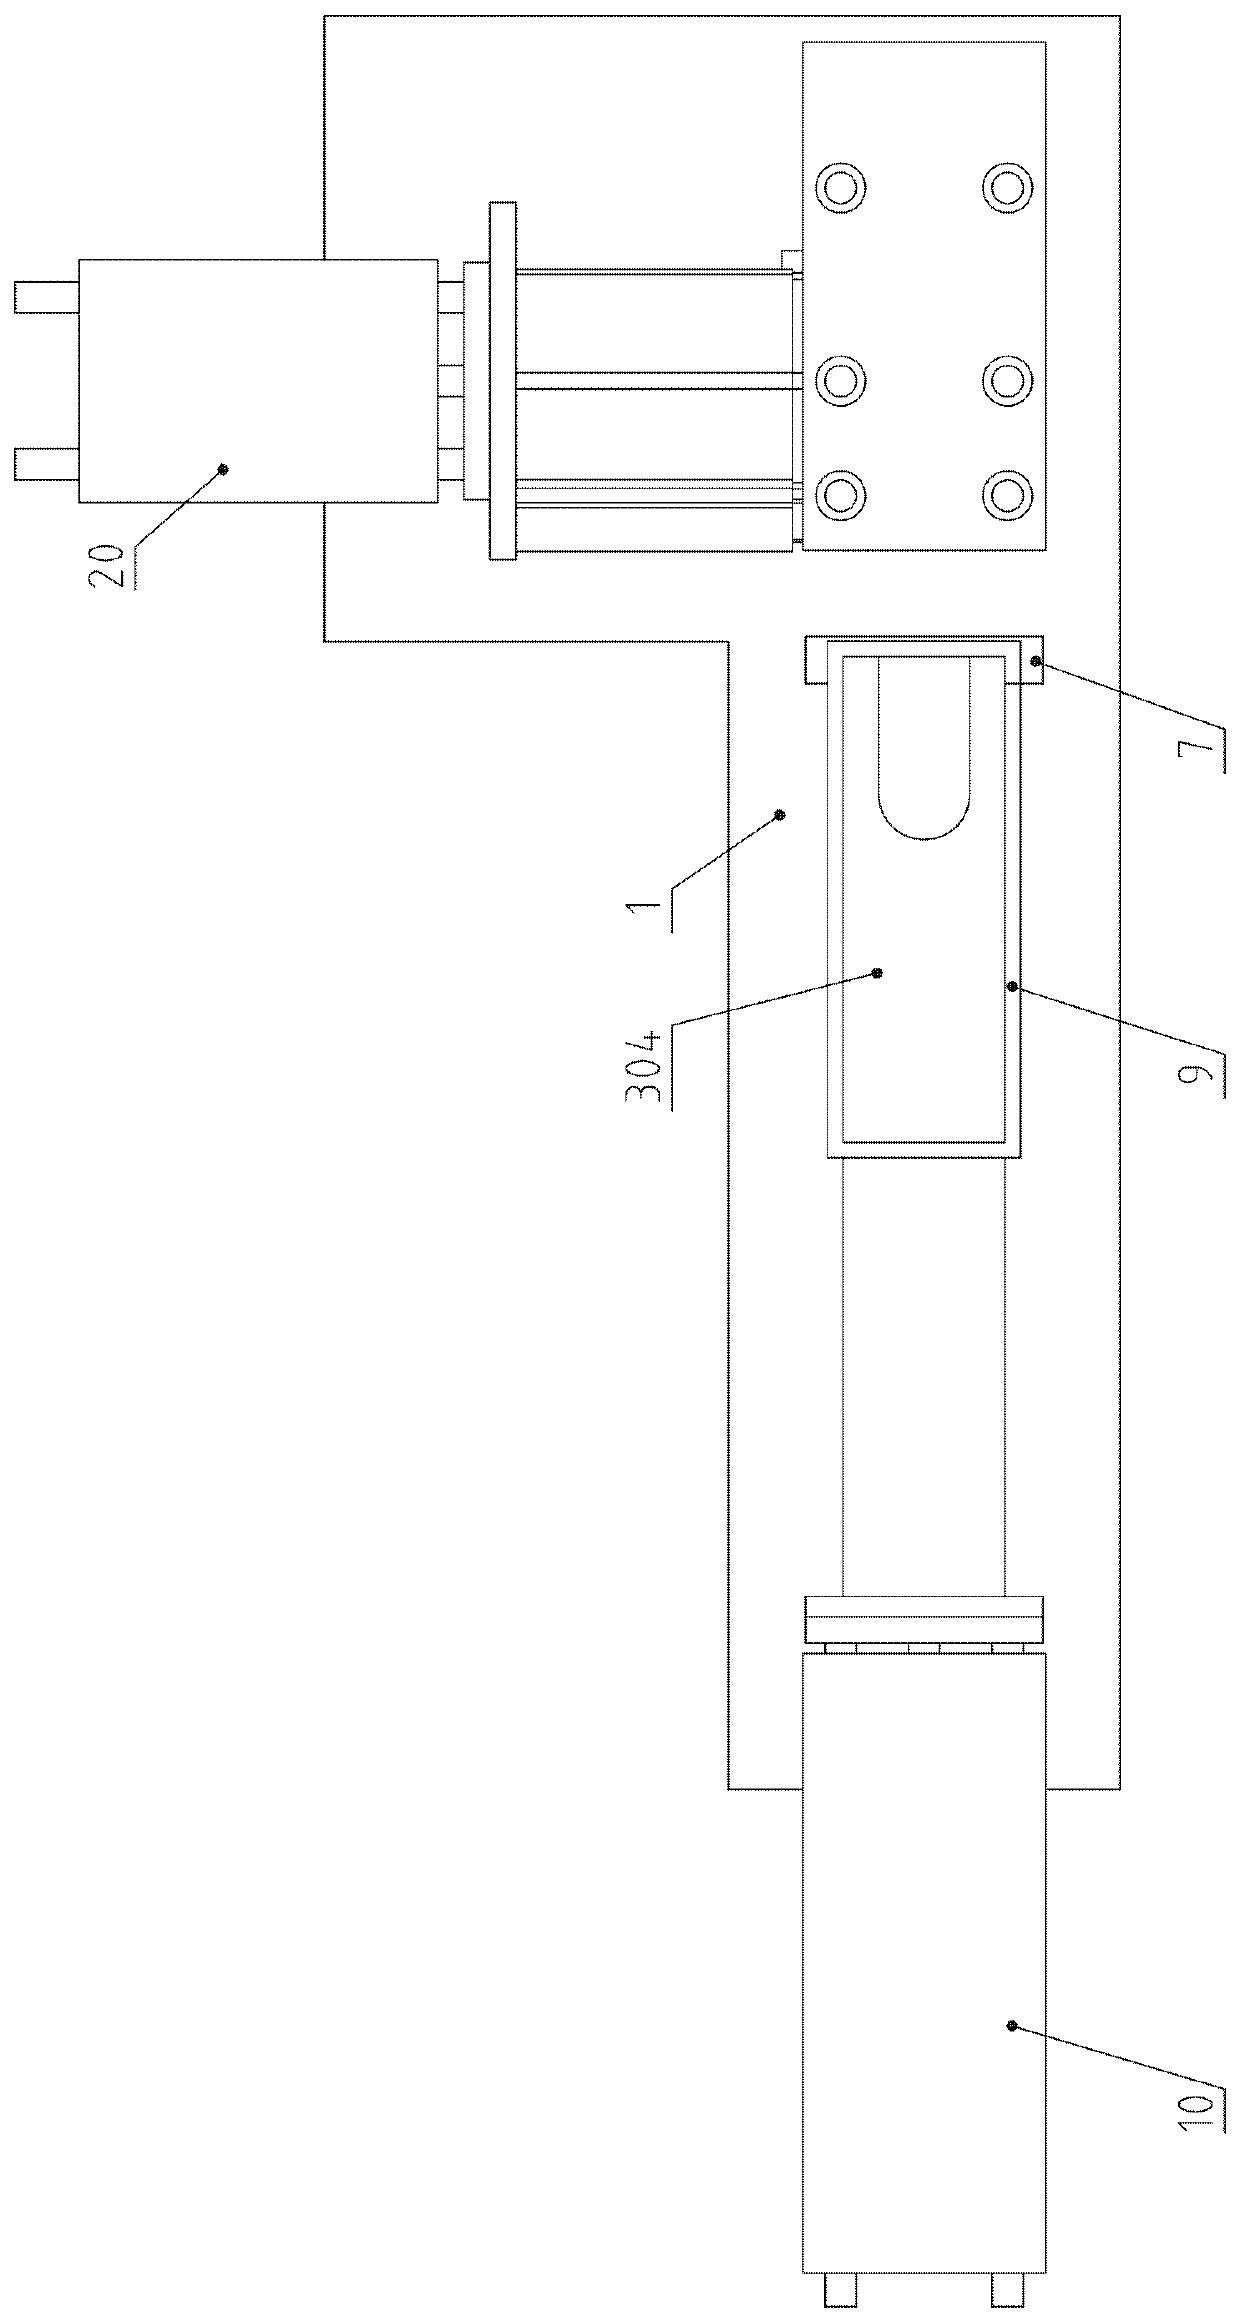 Automatic production device of turnover sliding shifting board used on medical gauze textile machine